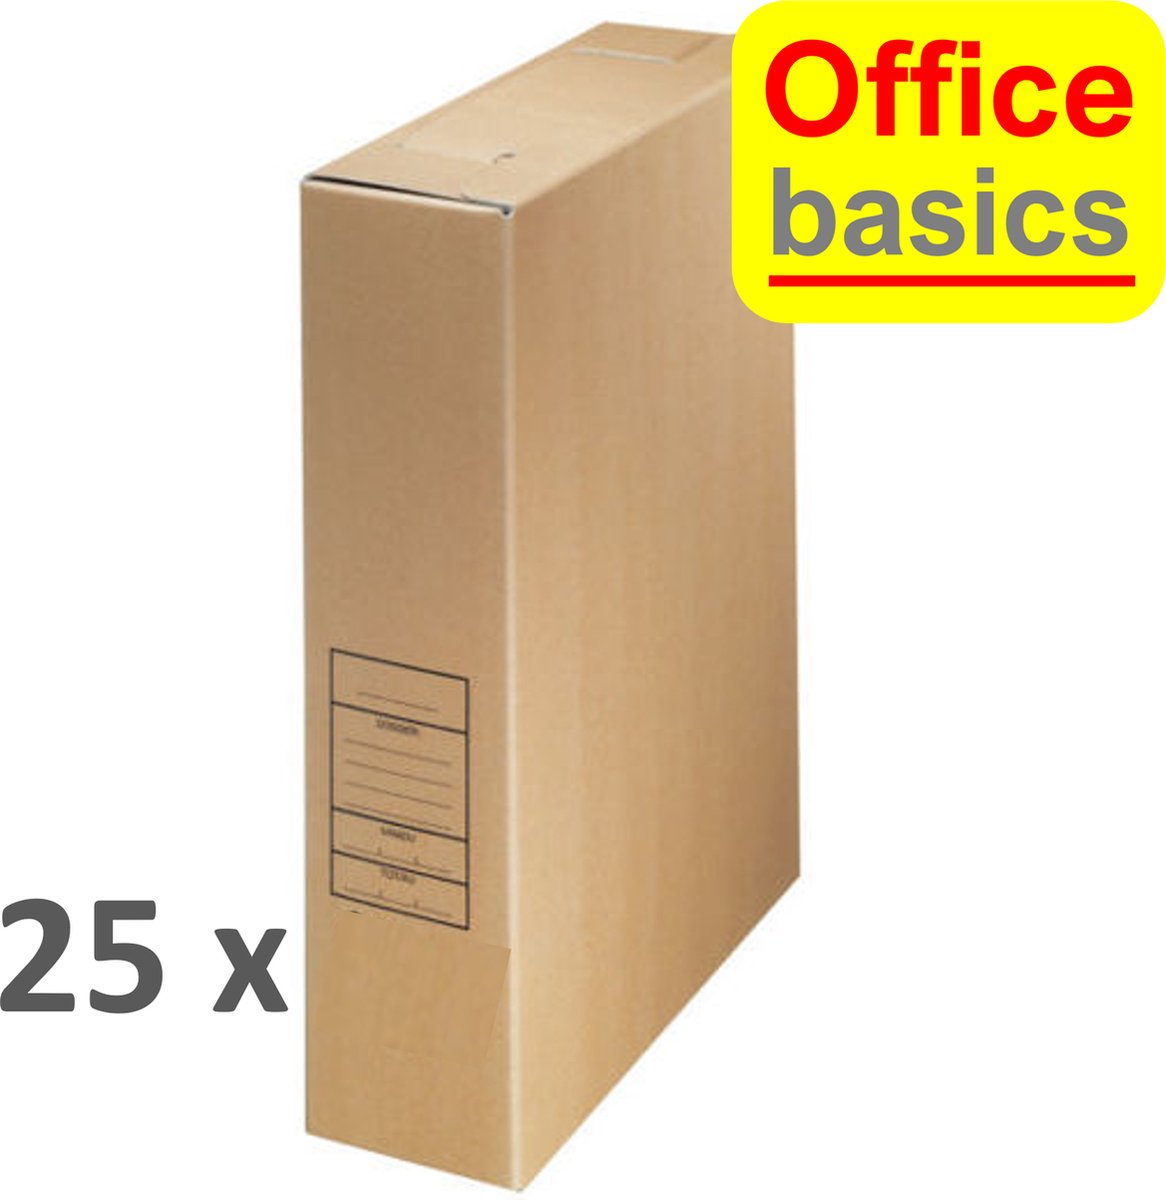 25 x archiefdoos Office Basics - A4 - extra stevig - 23 x 32 x 8 cm - Office Basics